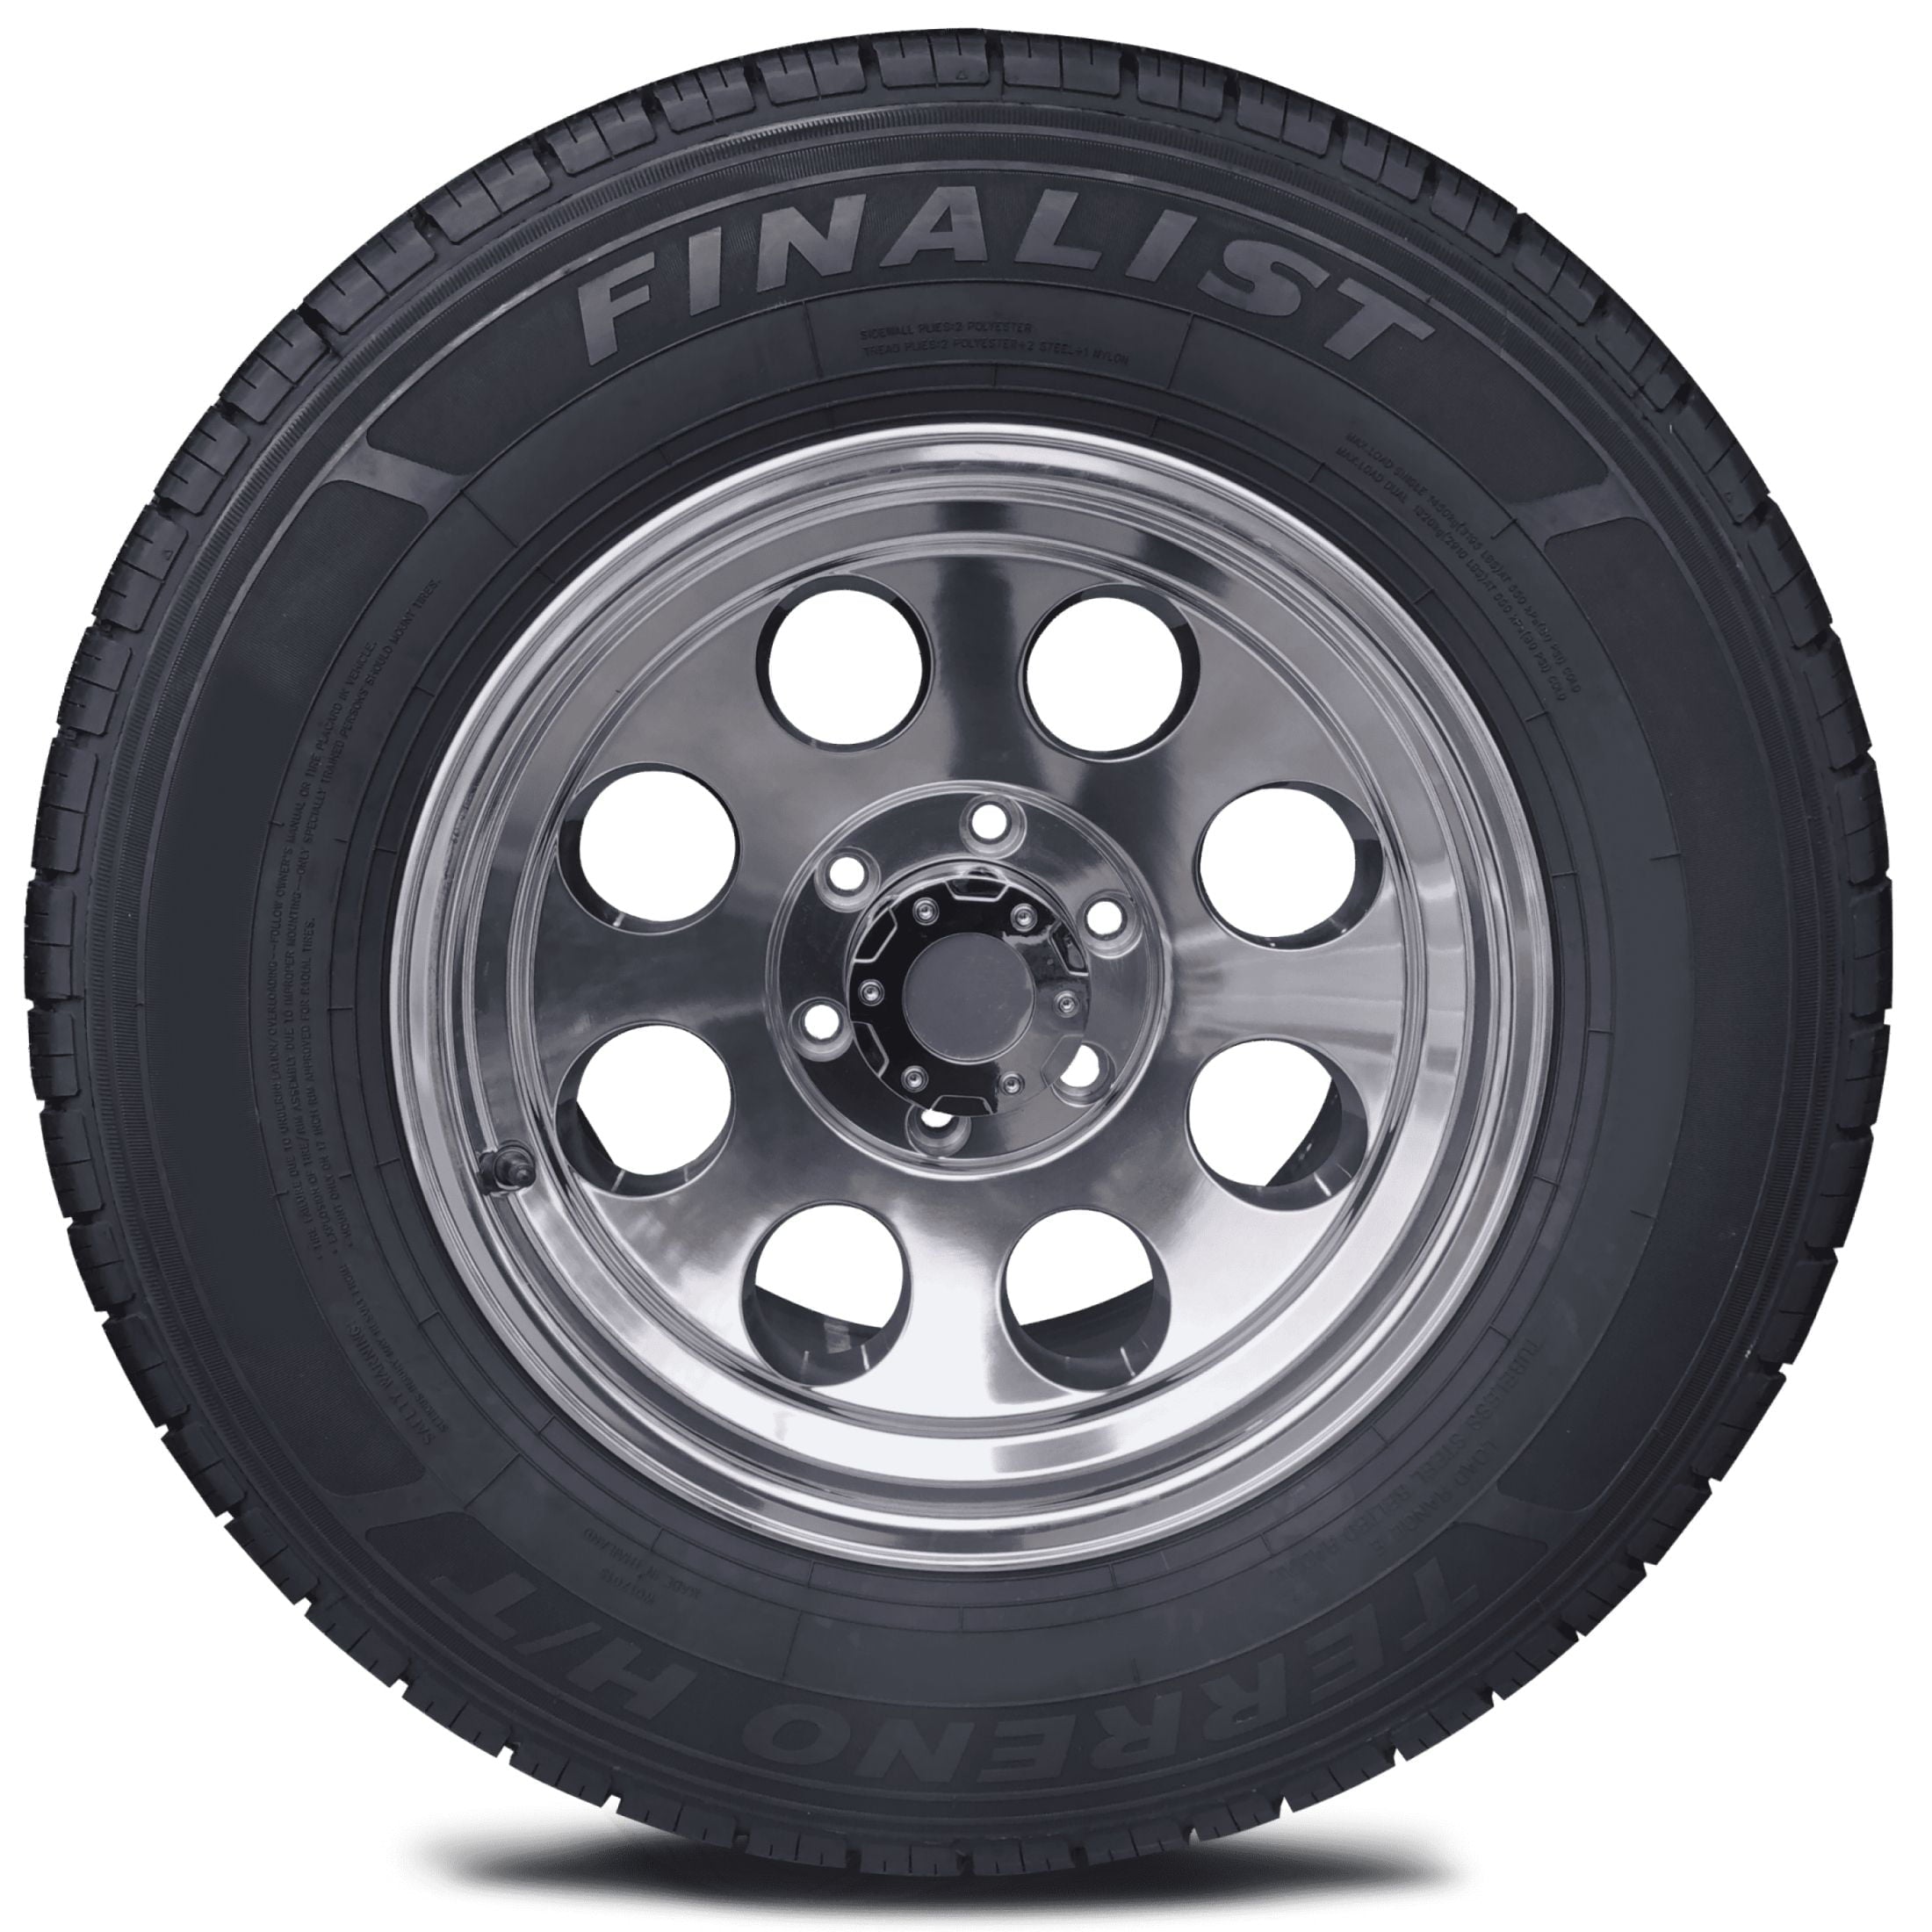 Finalist Terreno H/T 255/70R16 111T SUV Light Truck All Season Highway Terrain Tire 255/70/16 (Tire Only)